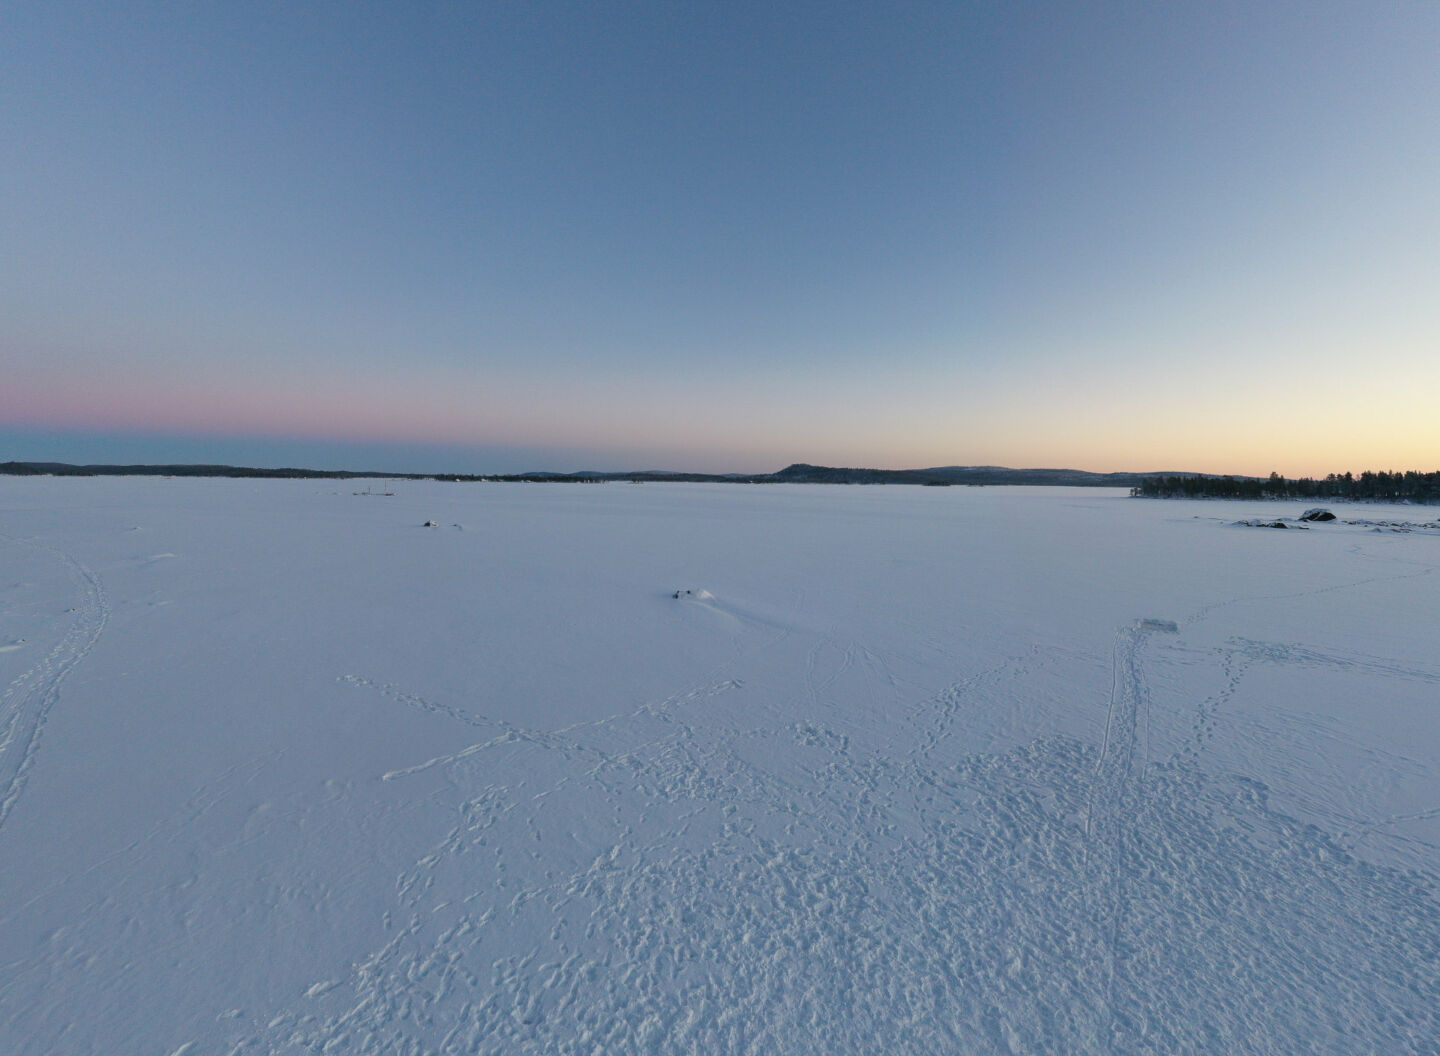 Sunrise over the frozen winter lake in Inari, a film location in Finnish Lapland